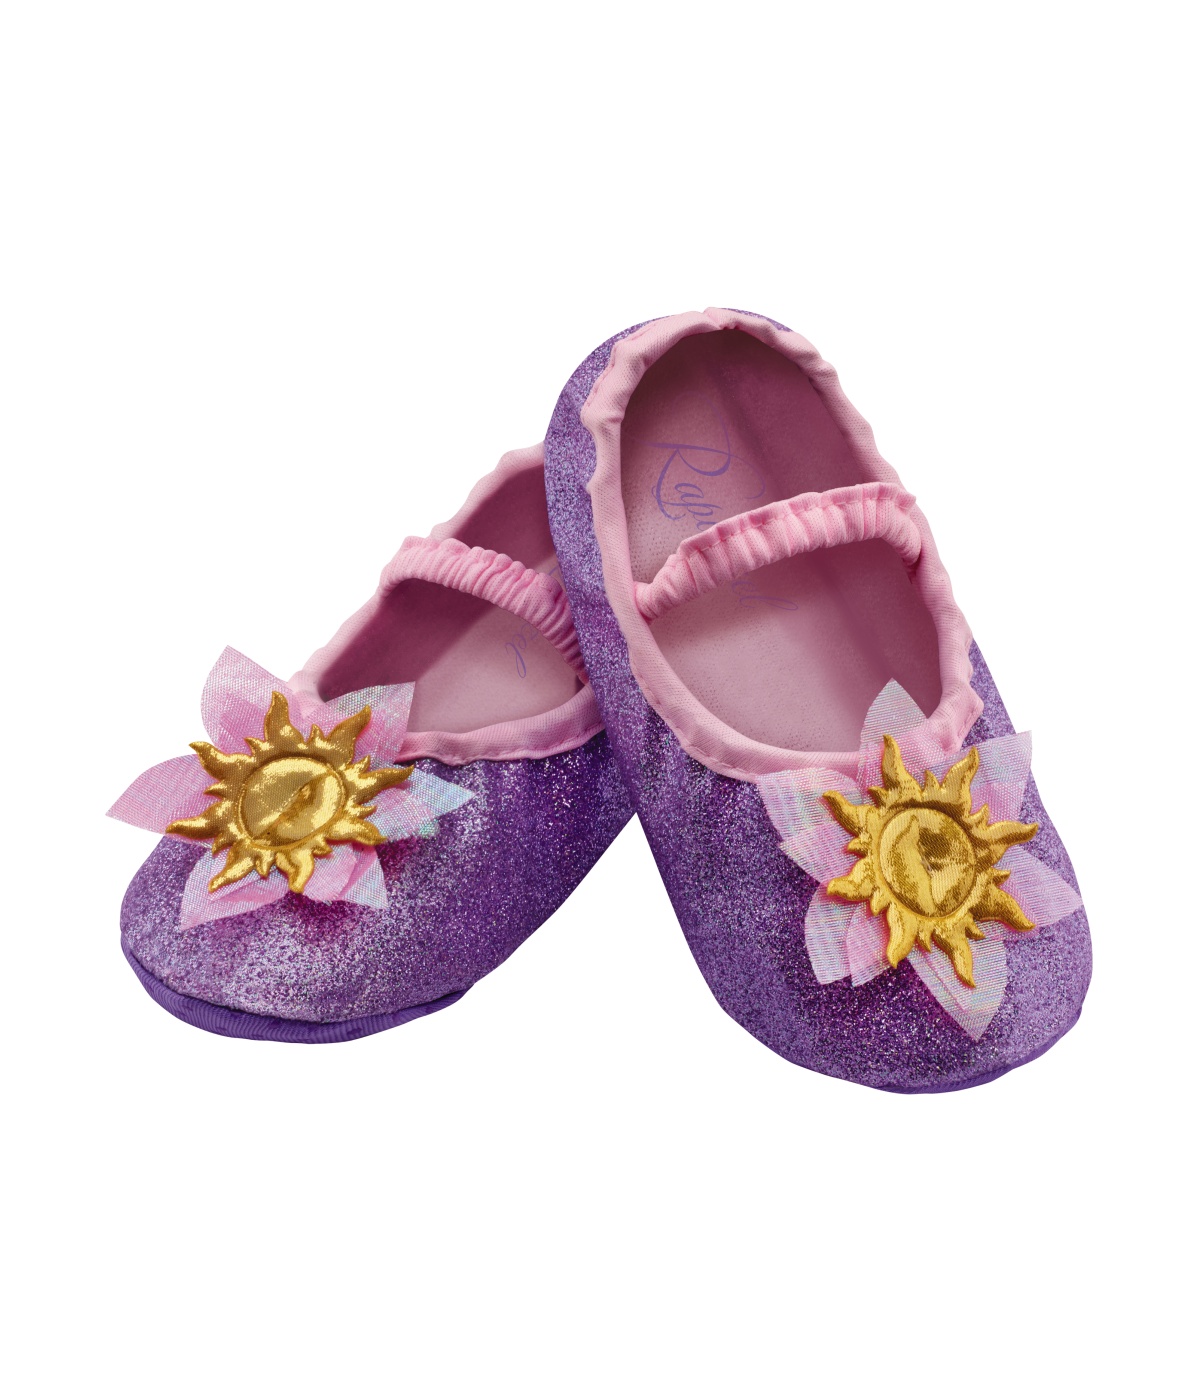  Princess Rapunzel Baby Slippers